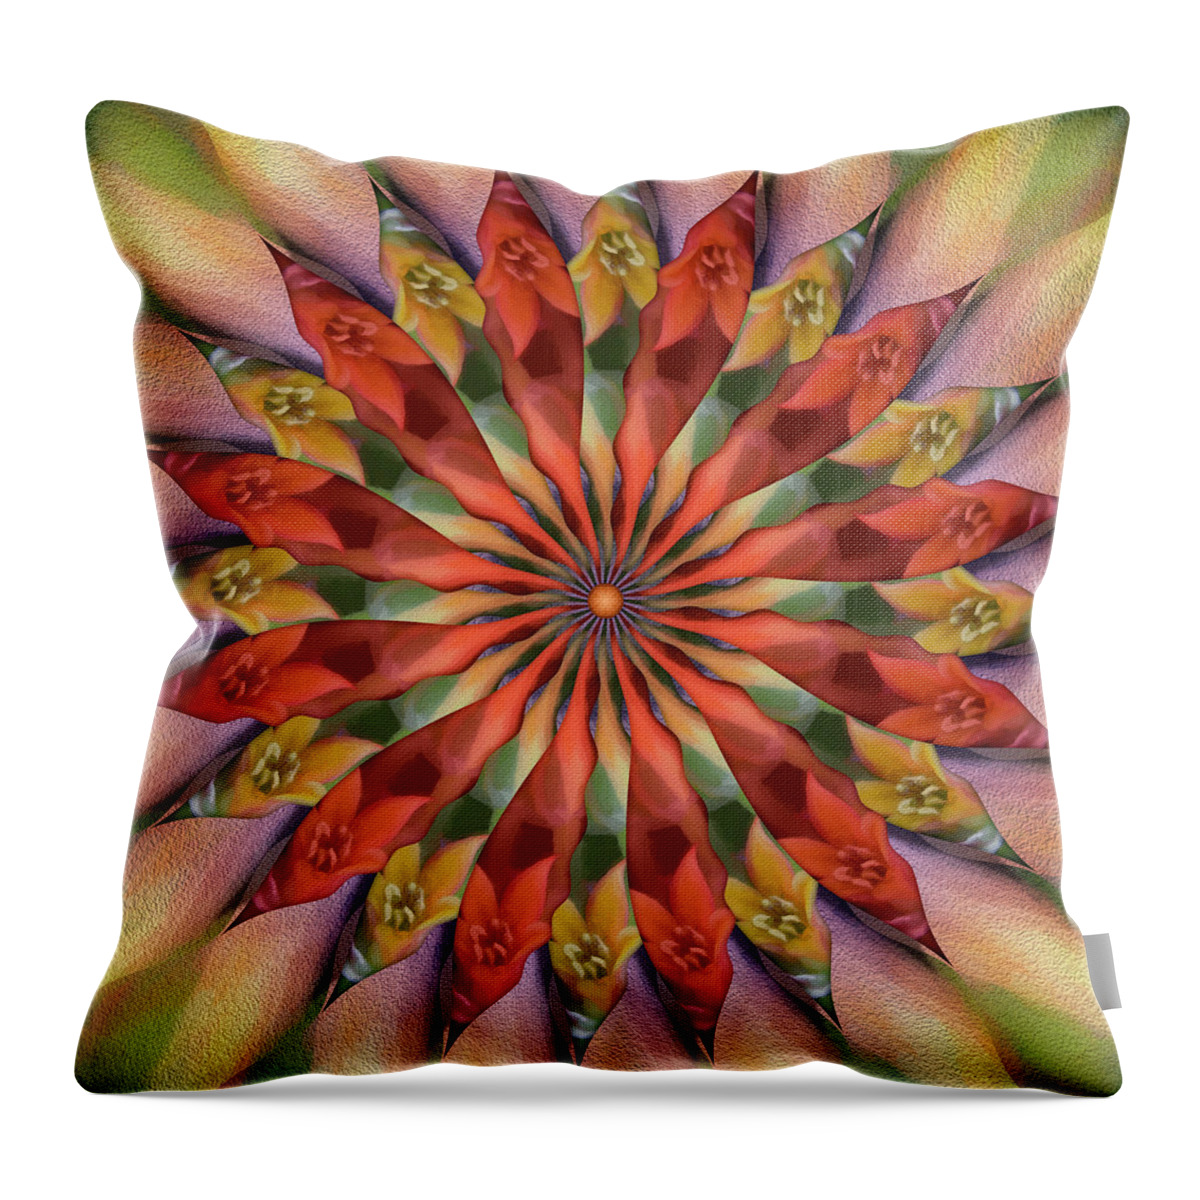 Spin-flower Mandala Throw Pillow featuring the digital art Red Velvet Quillineum by Becky Titus